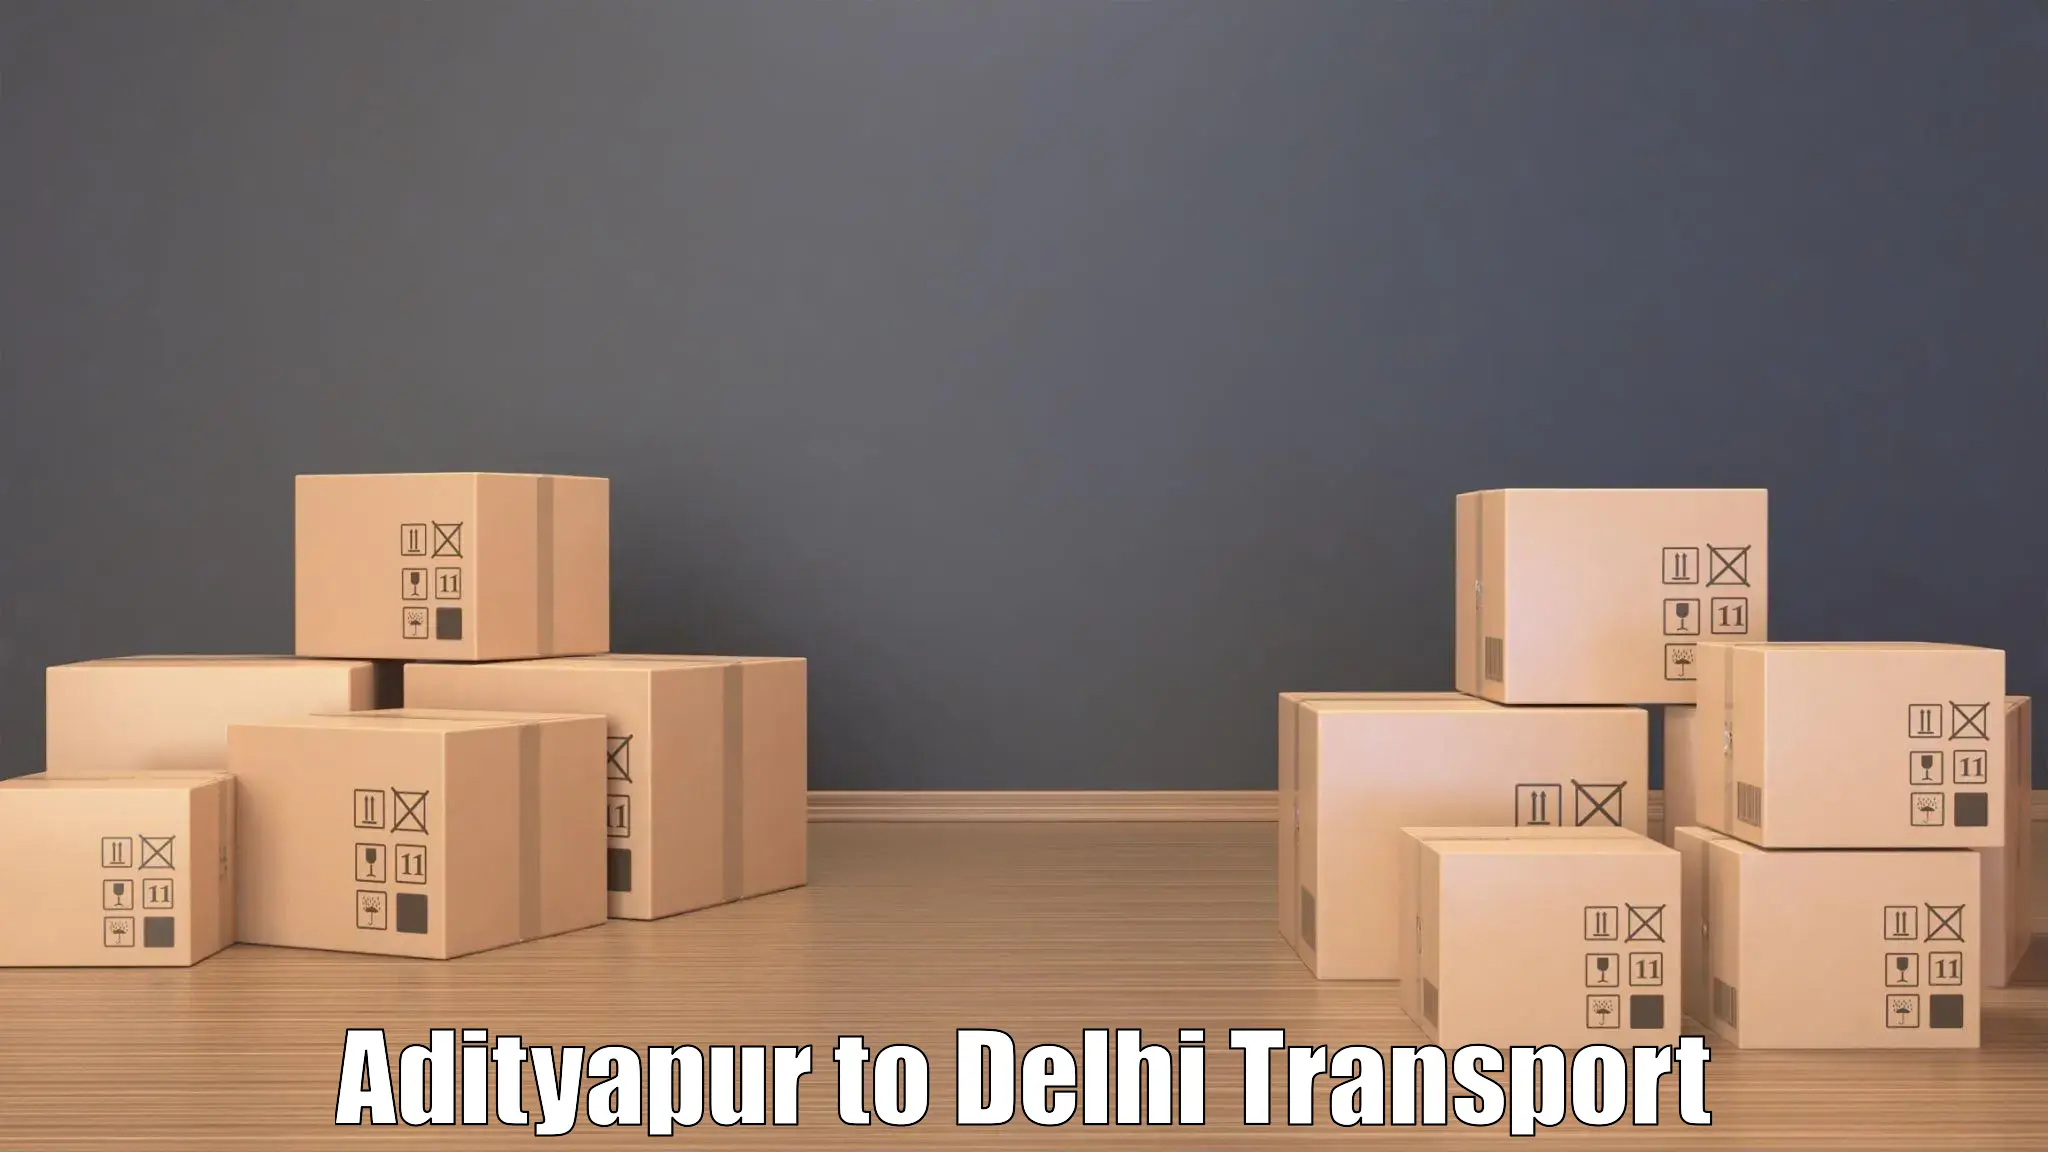 Nearest transport service Adityapur to Kalkaji